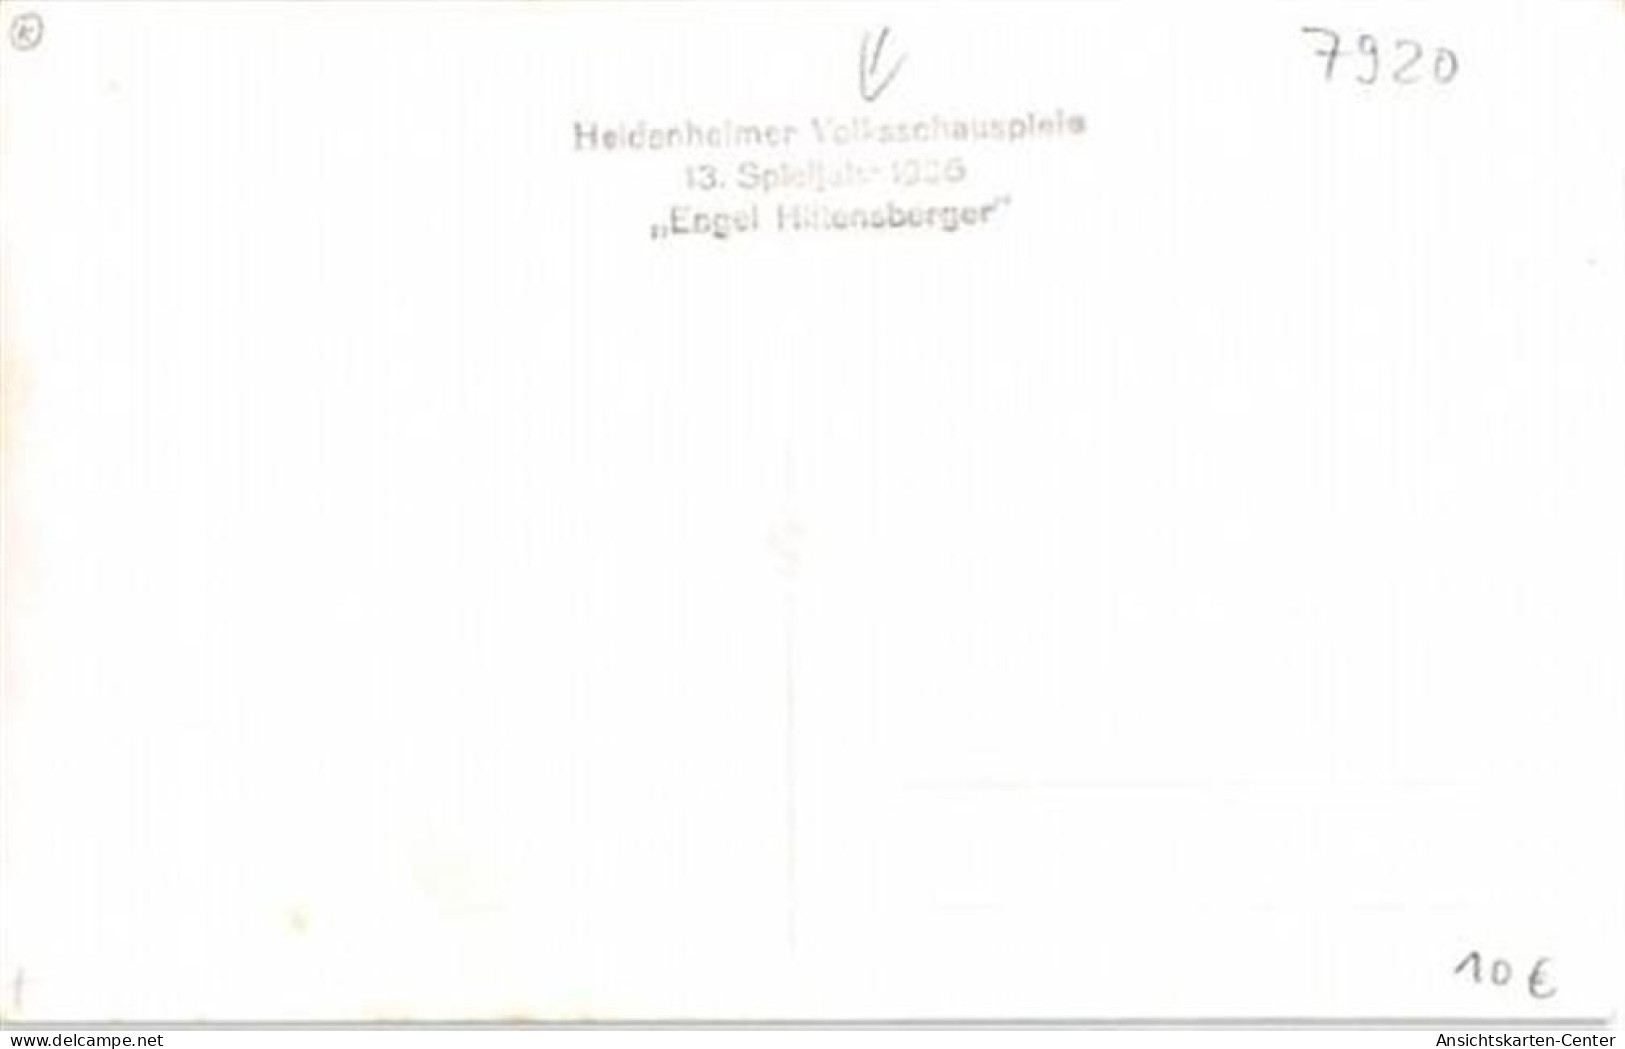 39112802 - Seltene Fotokarte Heidenheim. Volksschauspiele 13. September 1936  Engel Hiltensberger . Aufgang Zur Kirche  - Heidenheim